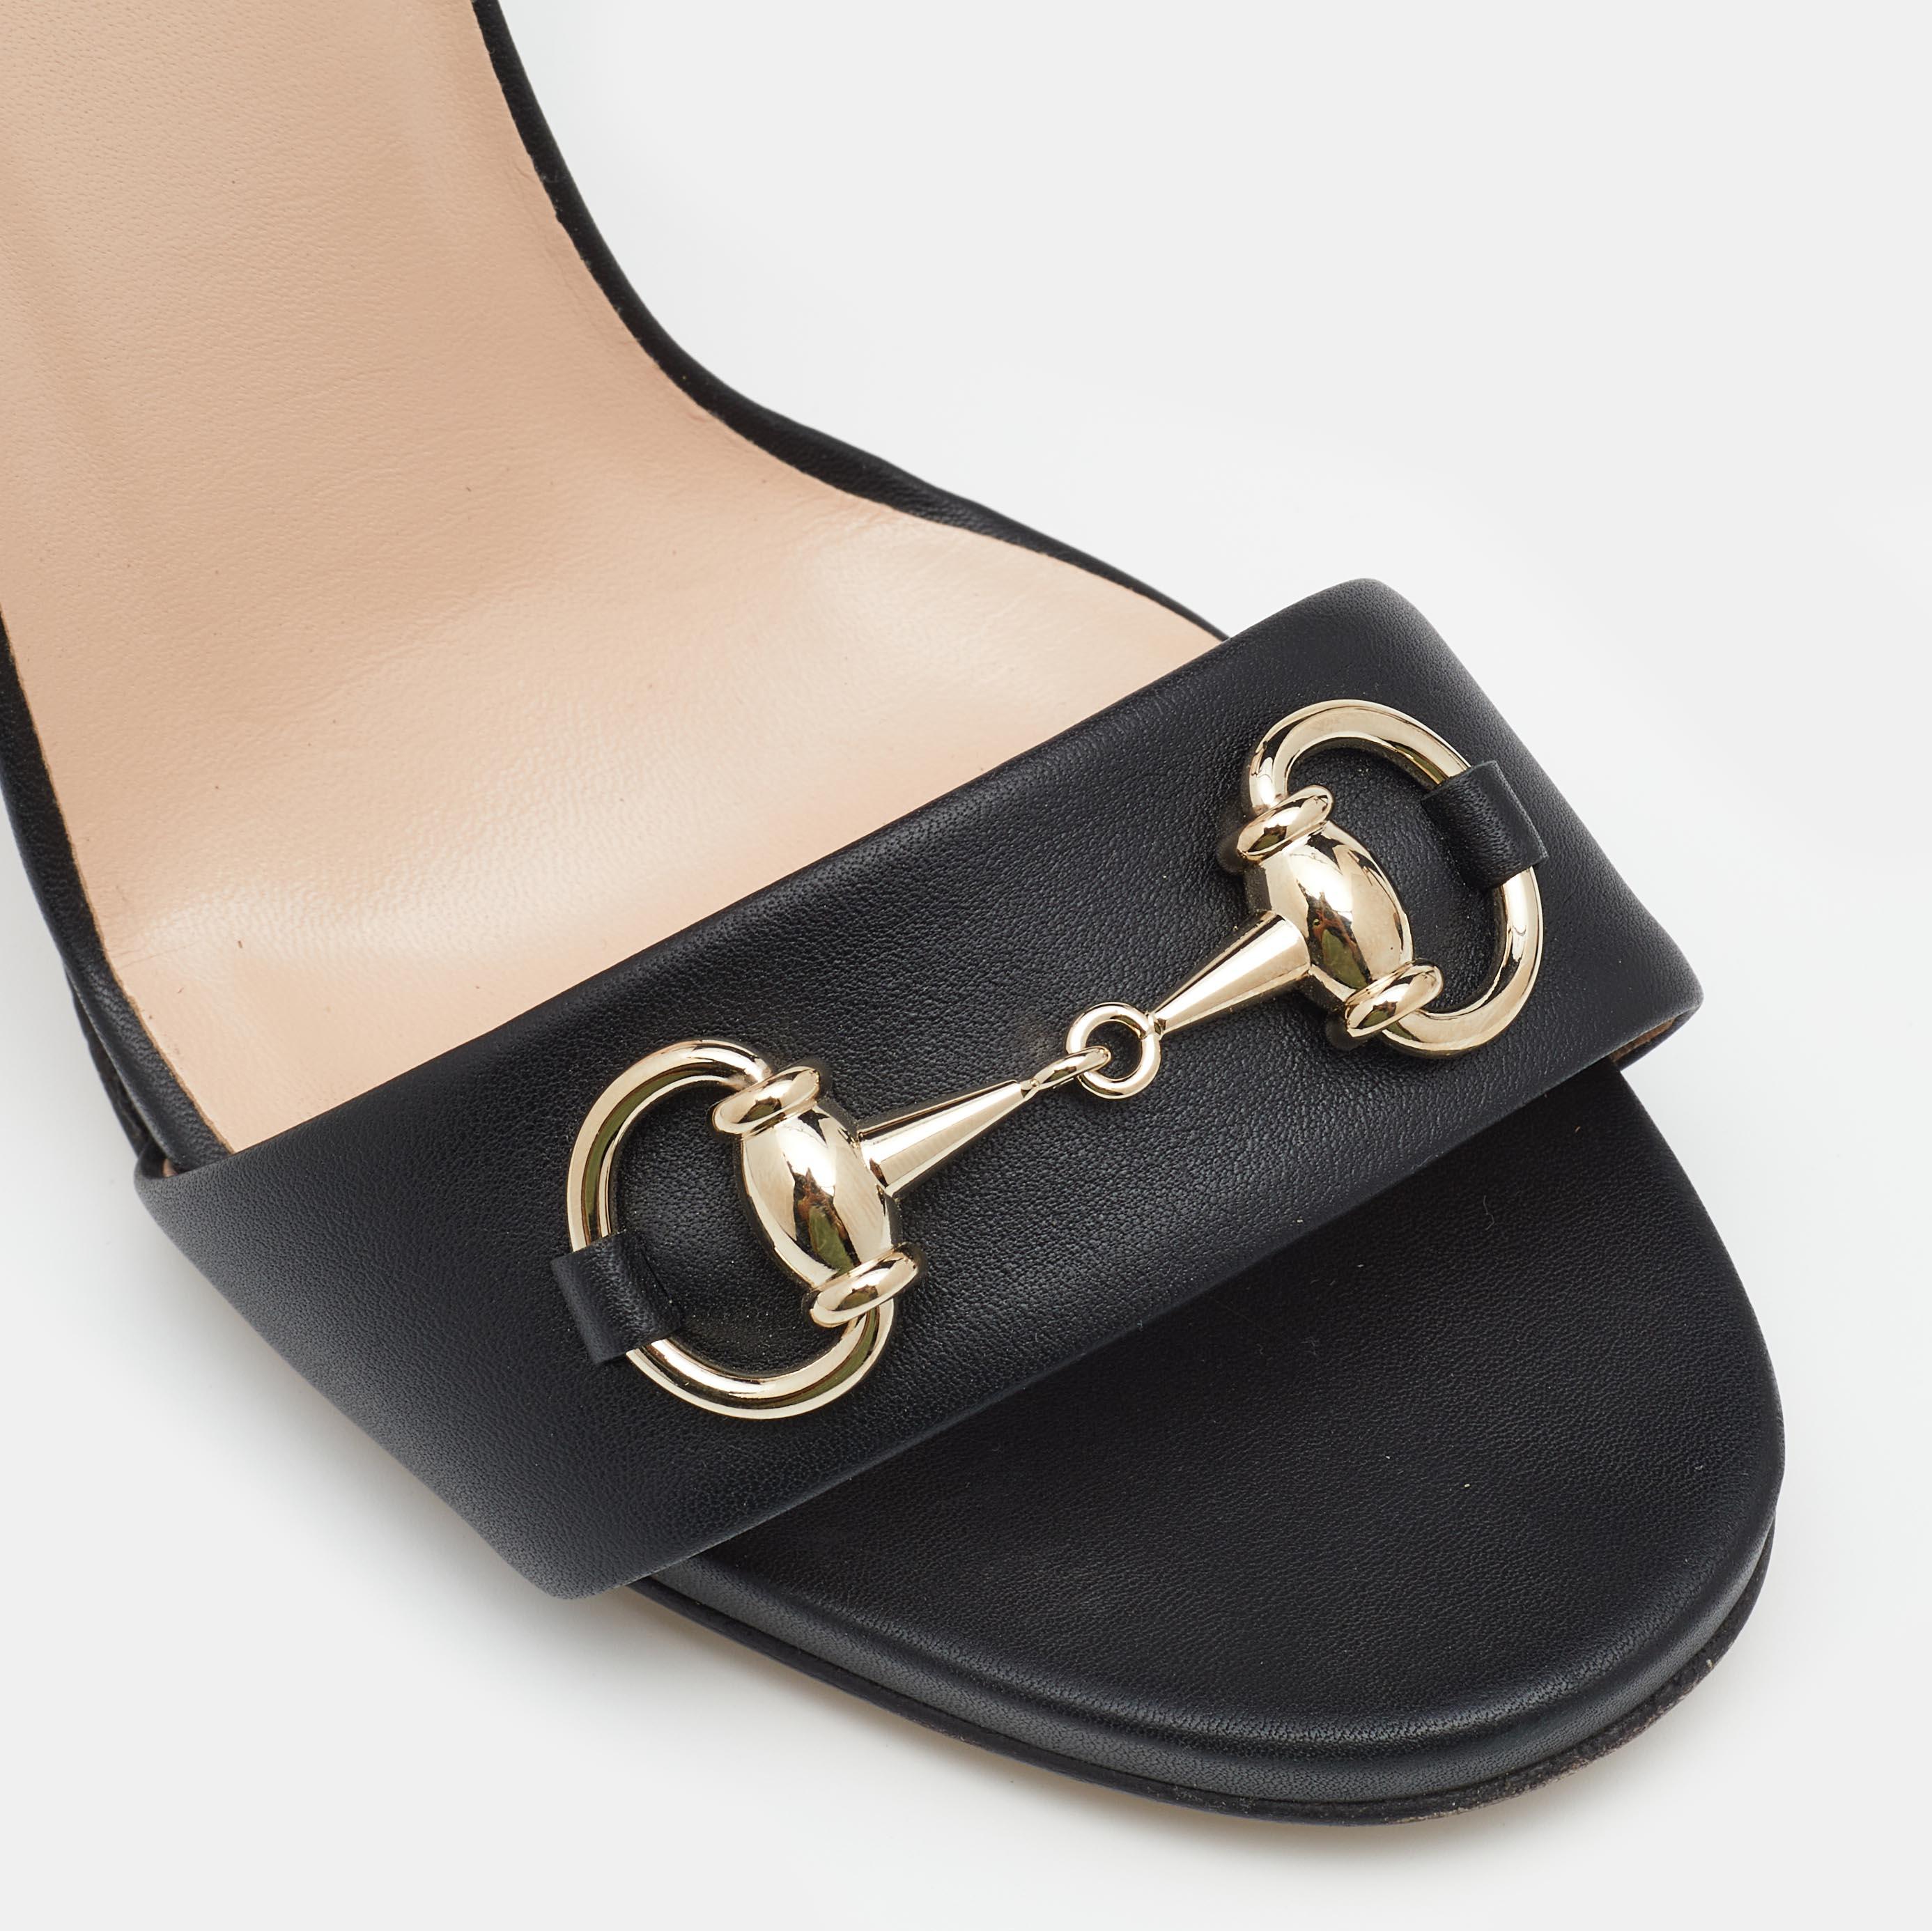 Gucci Black Leather Horsebit Ankle Strap Block Heel Sandals Size 38.5 2